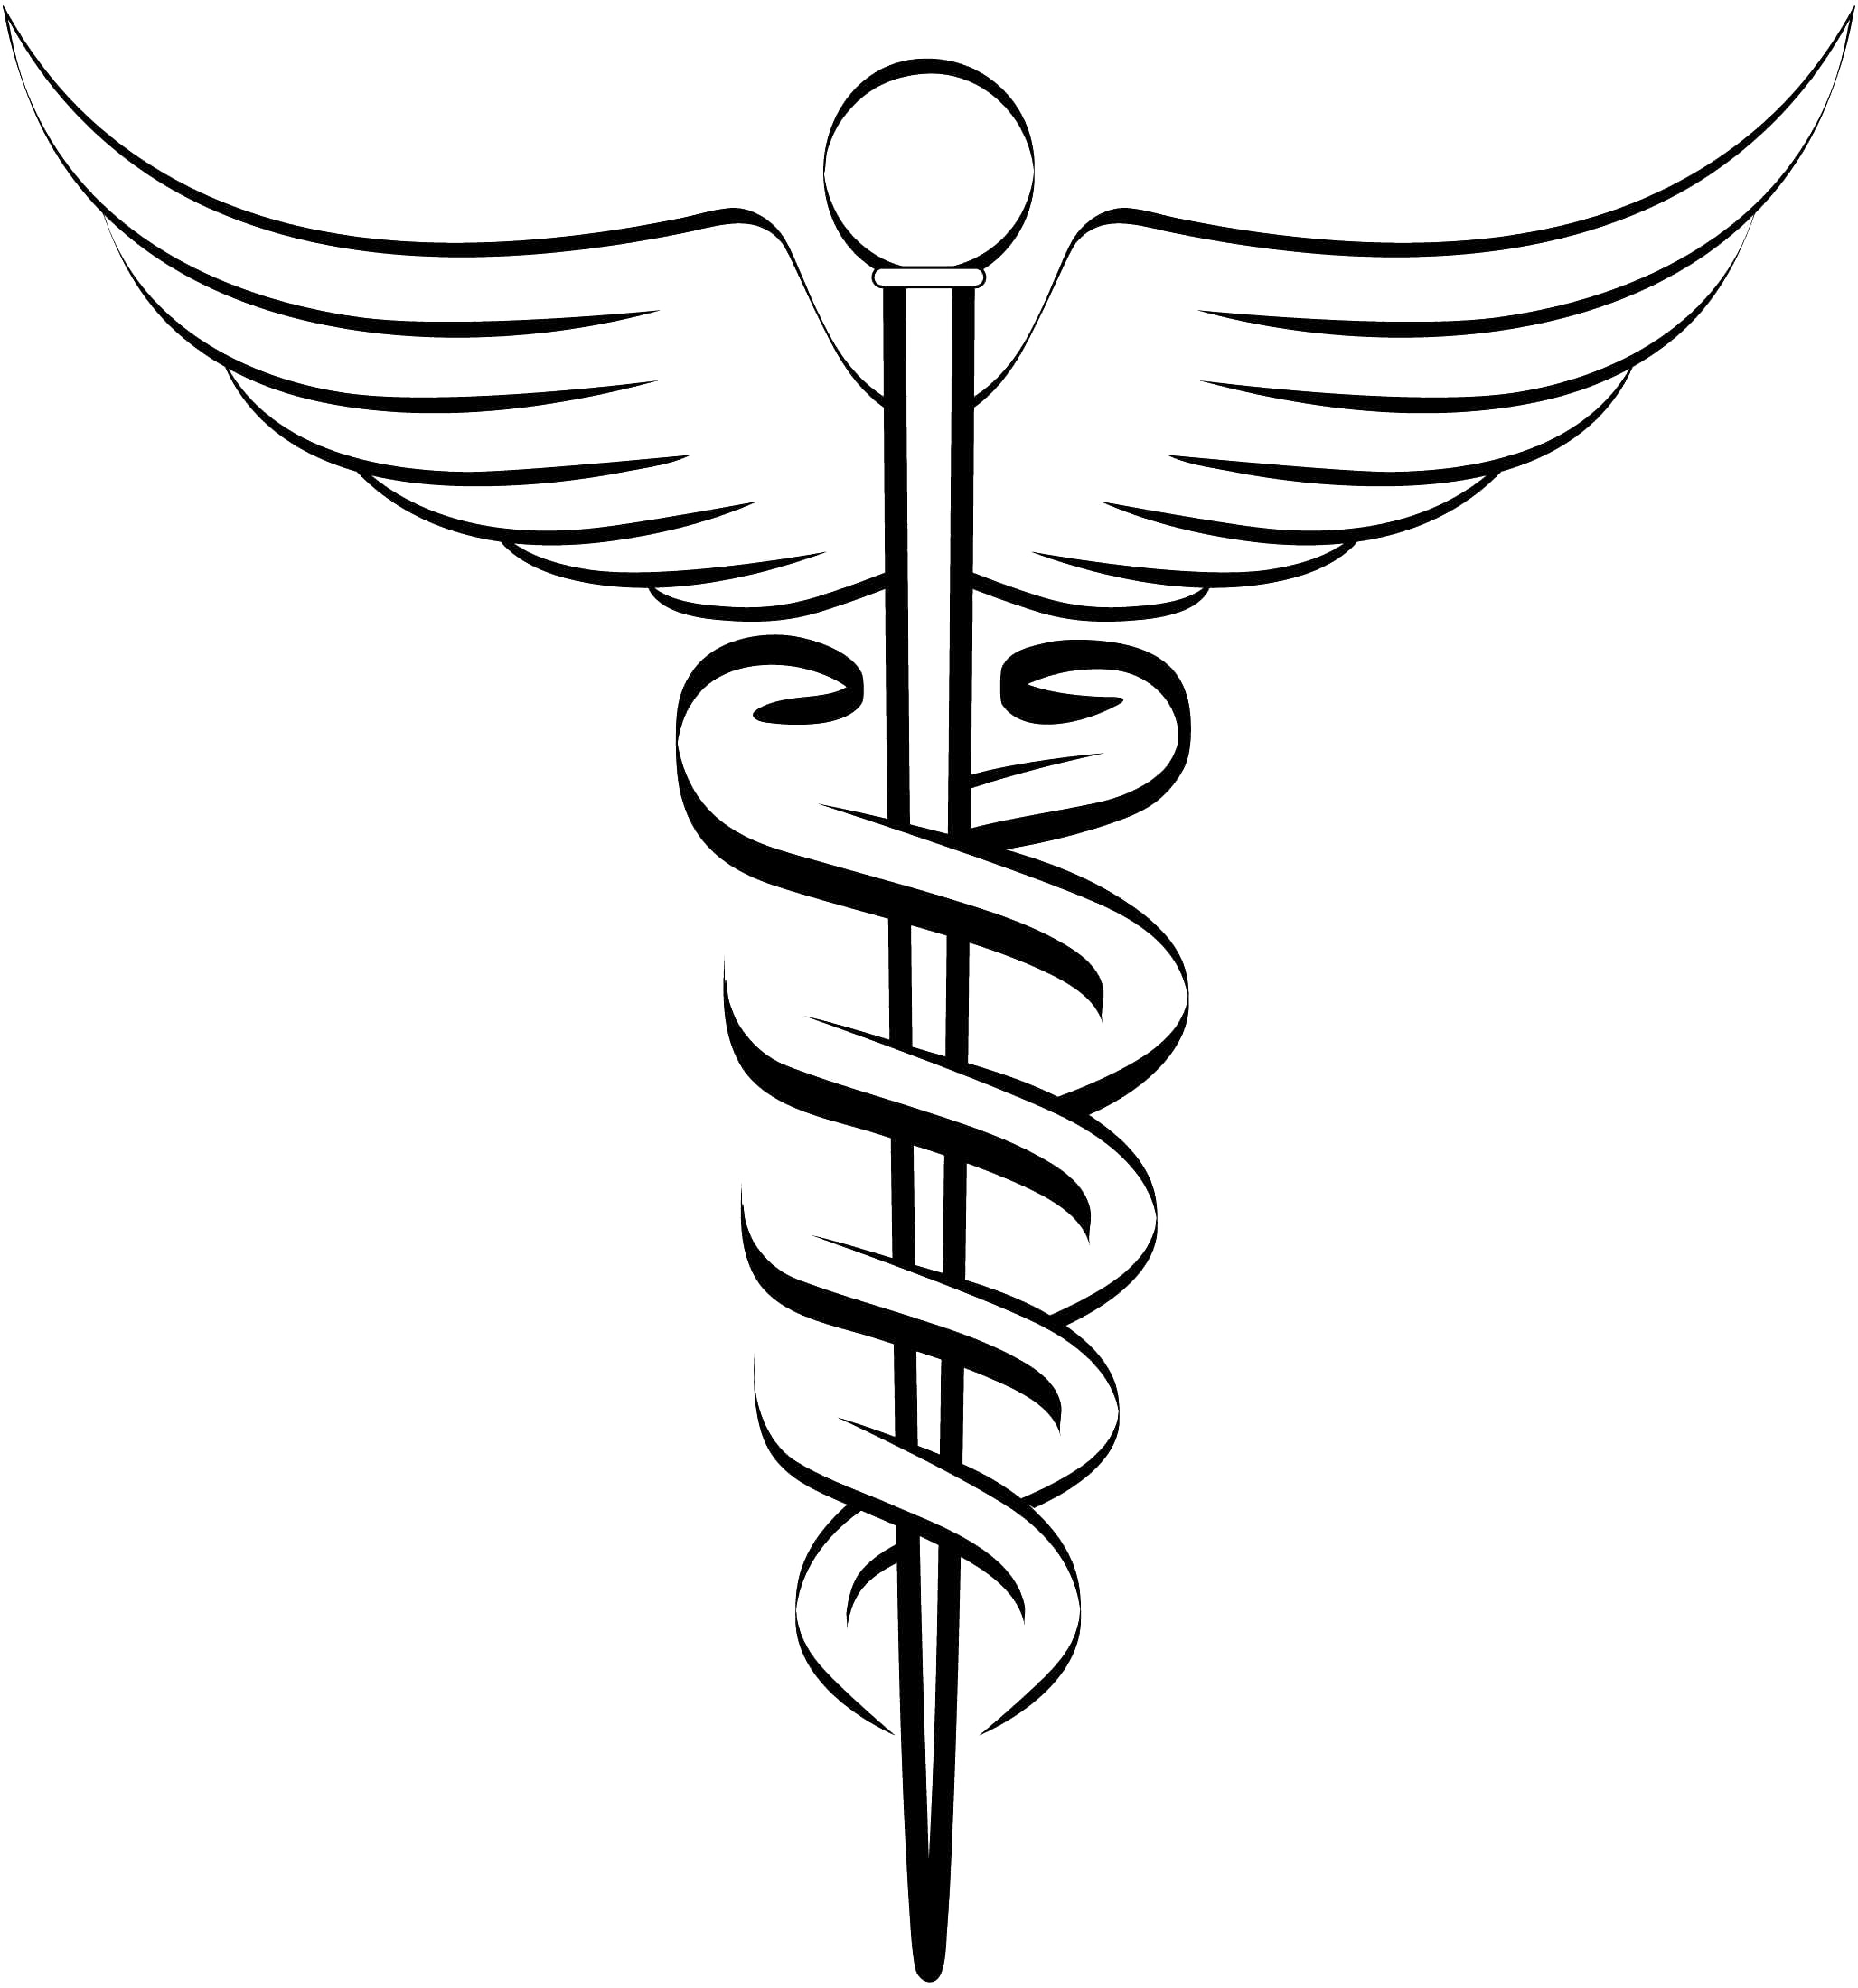 free chiropractic logo clip art - photo #43